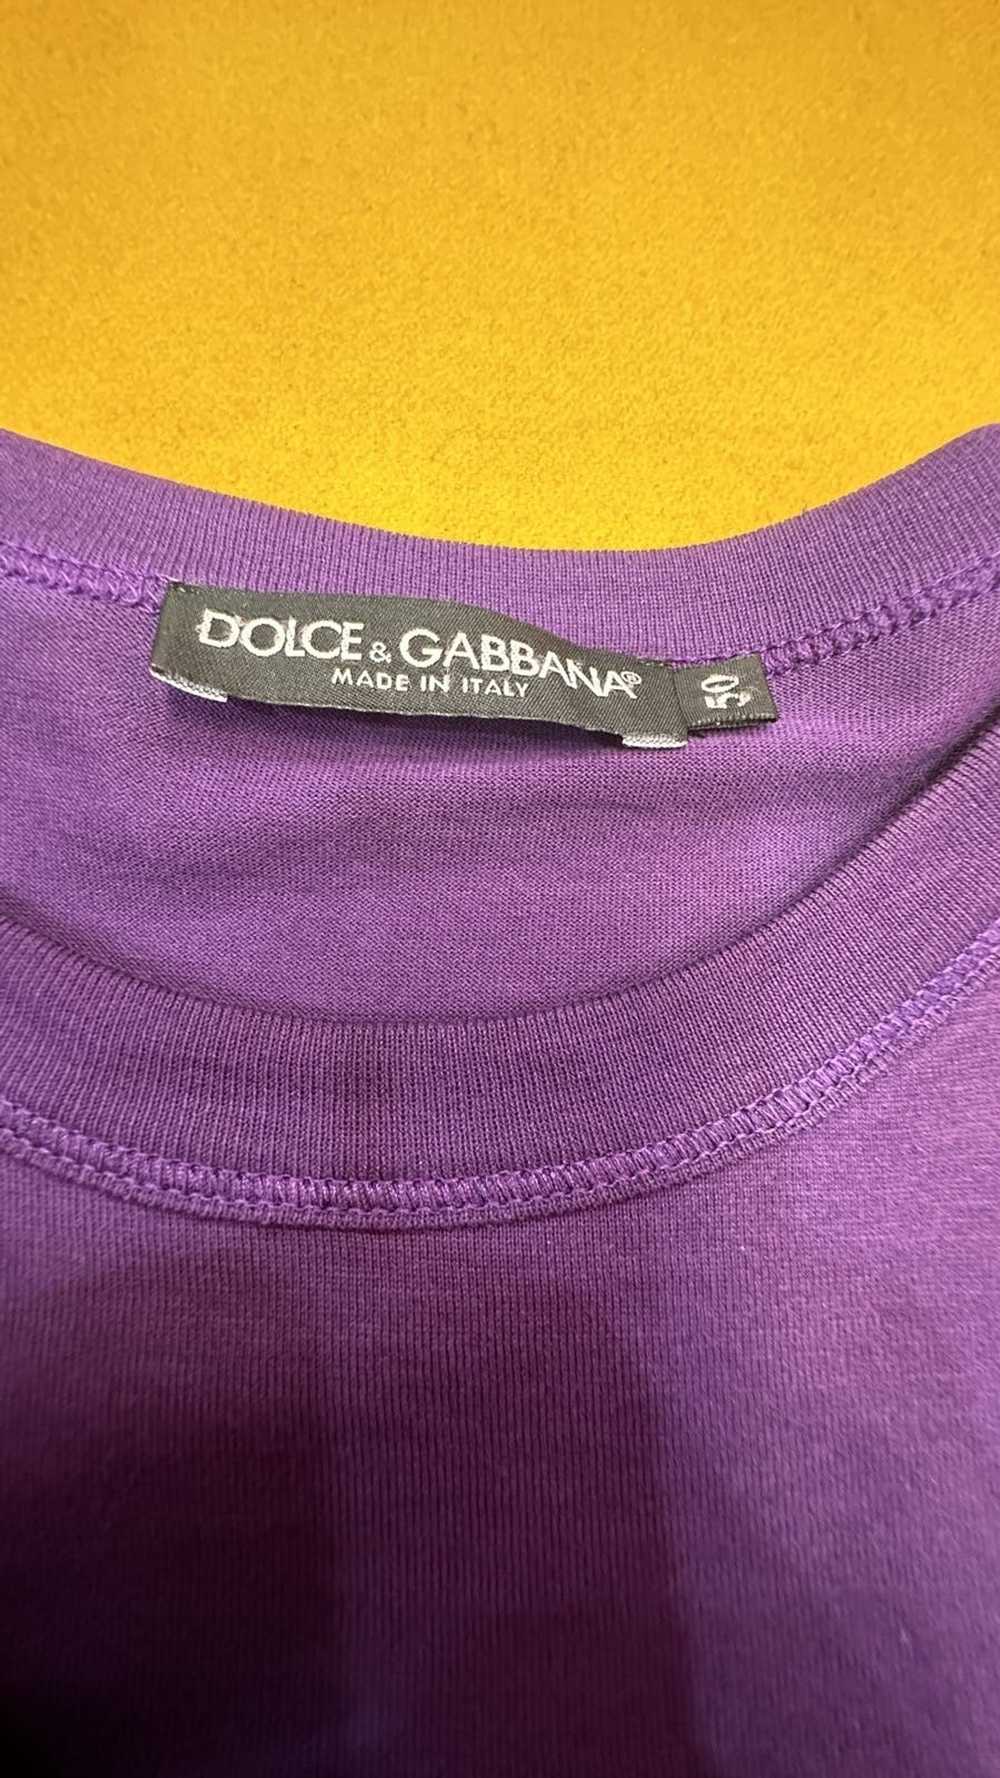 Dolce & Gabbana Dolce deep purple Tee - image 3